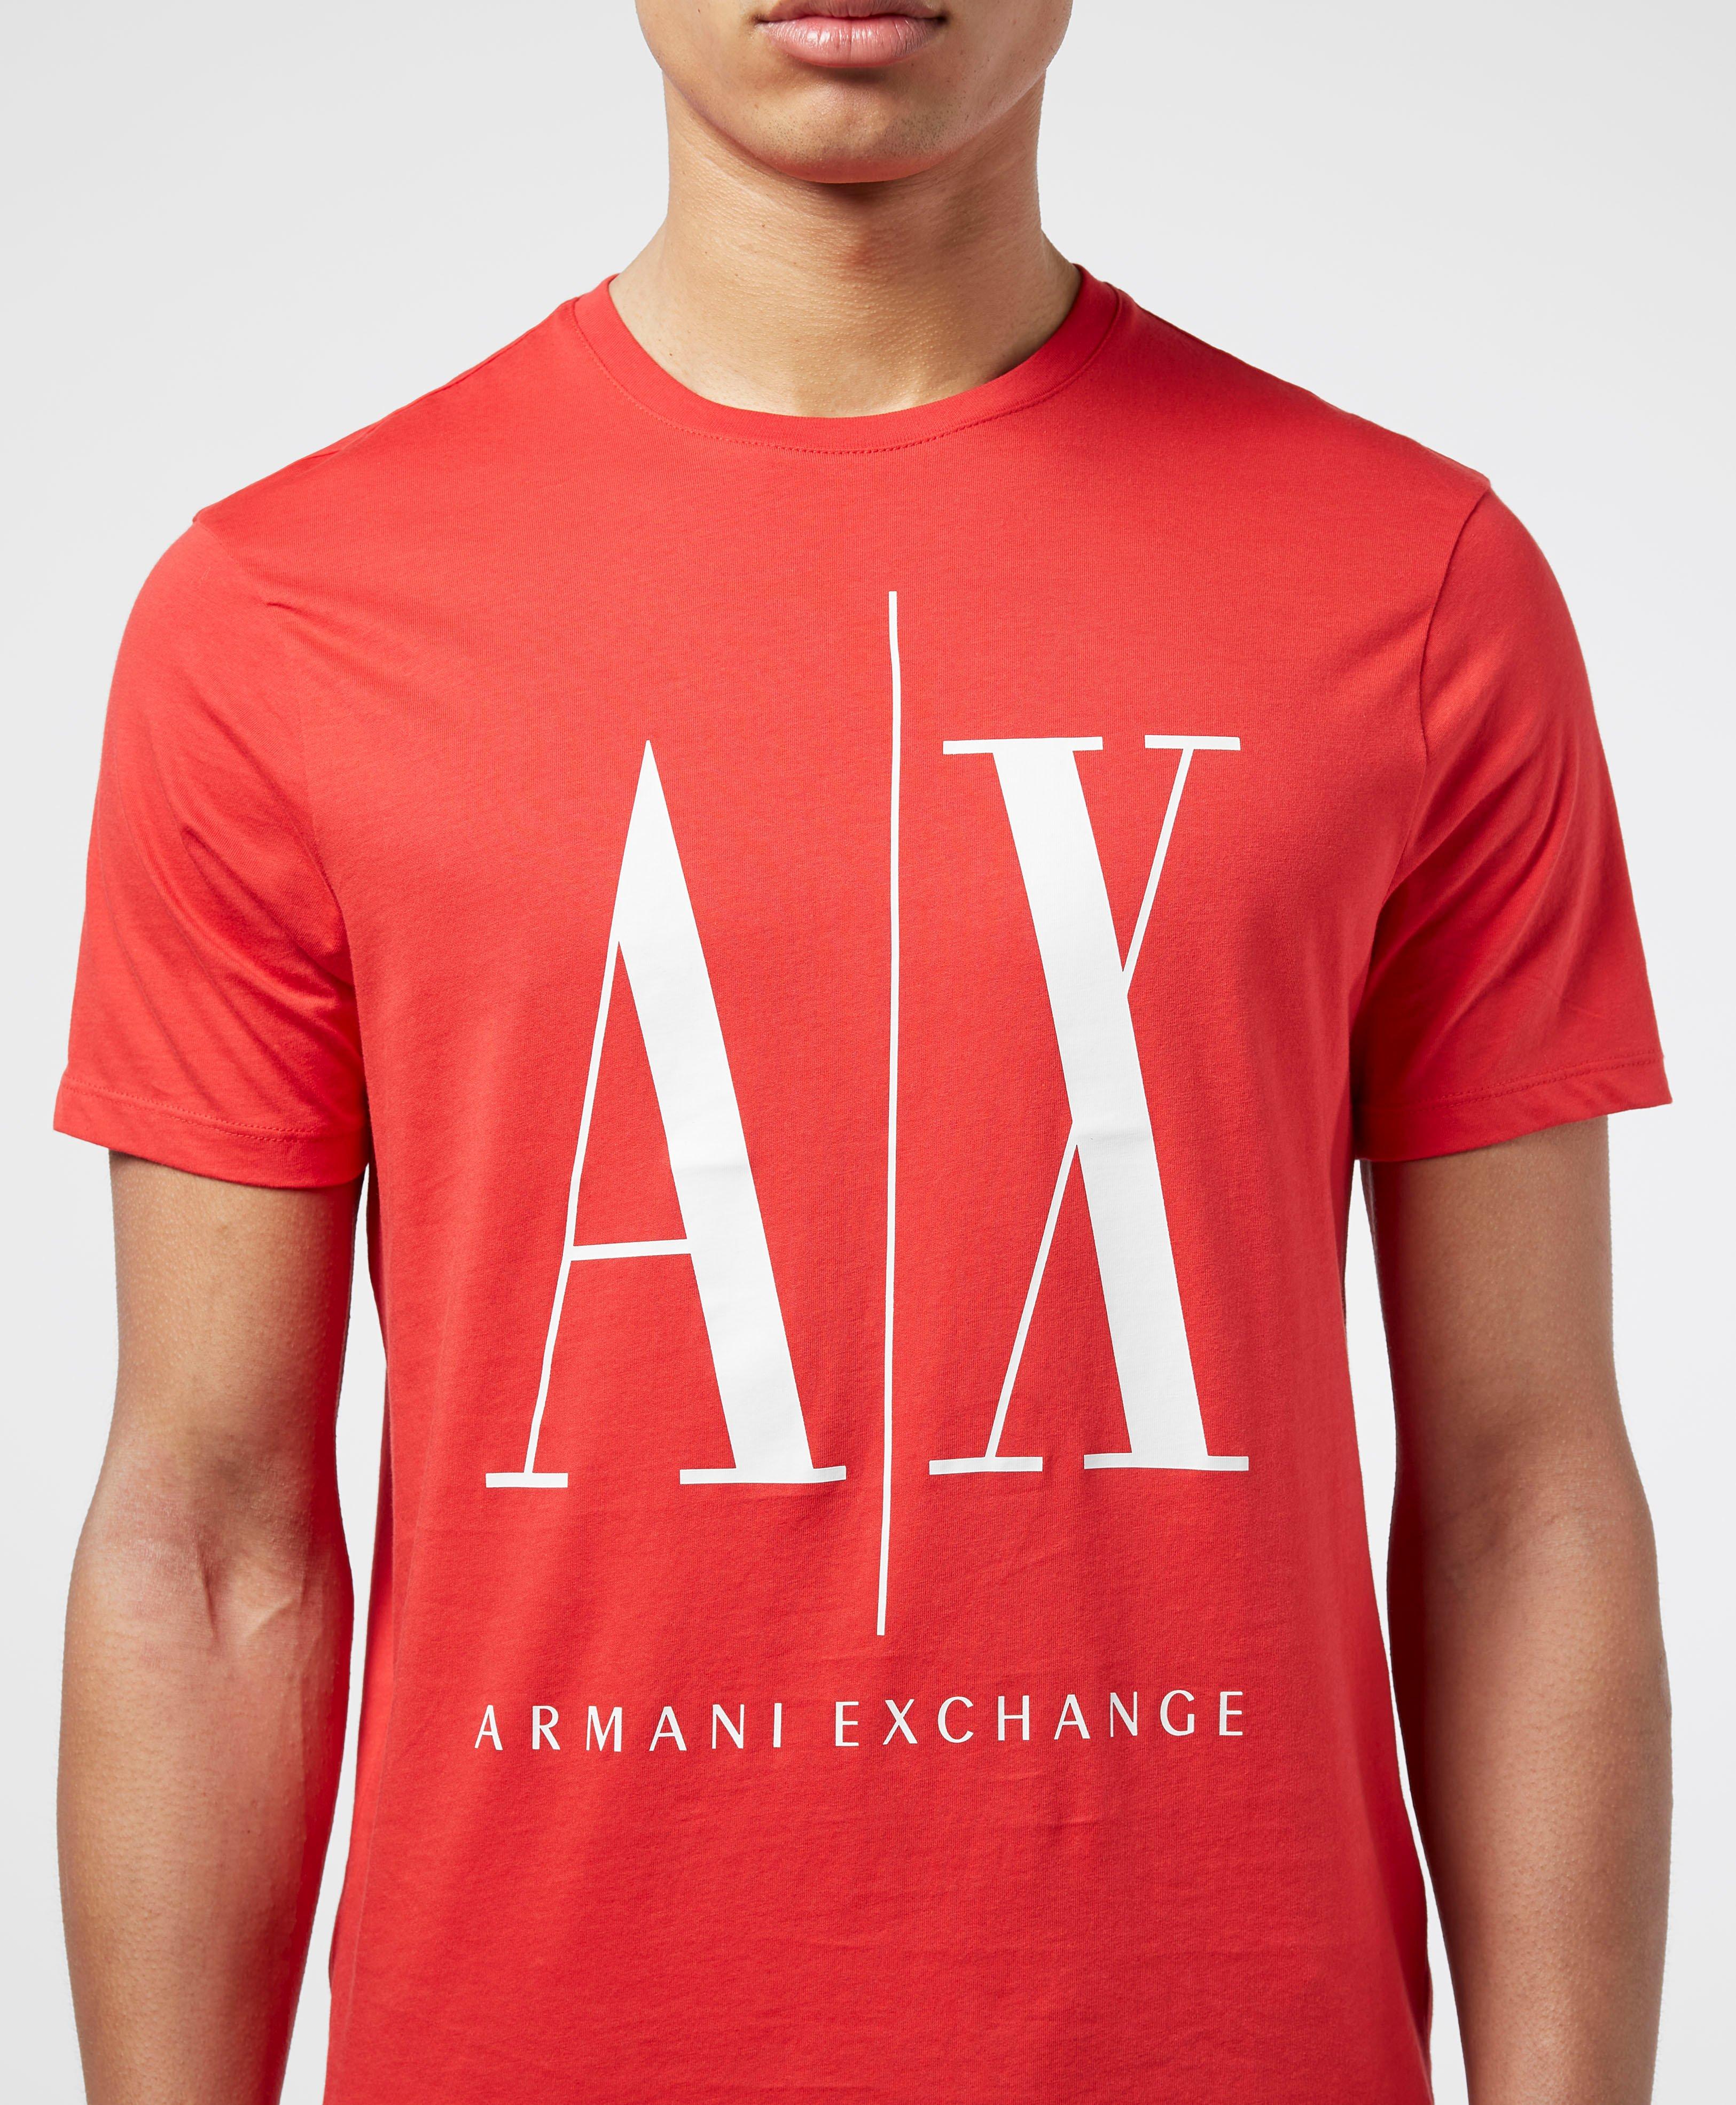 armani exchange full sleeve t shirt